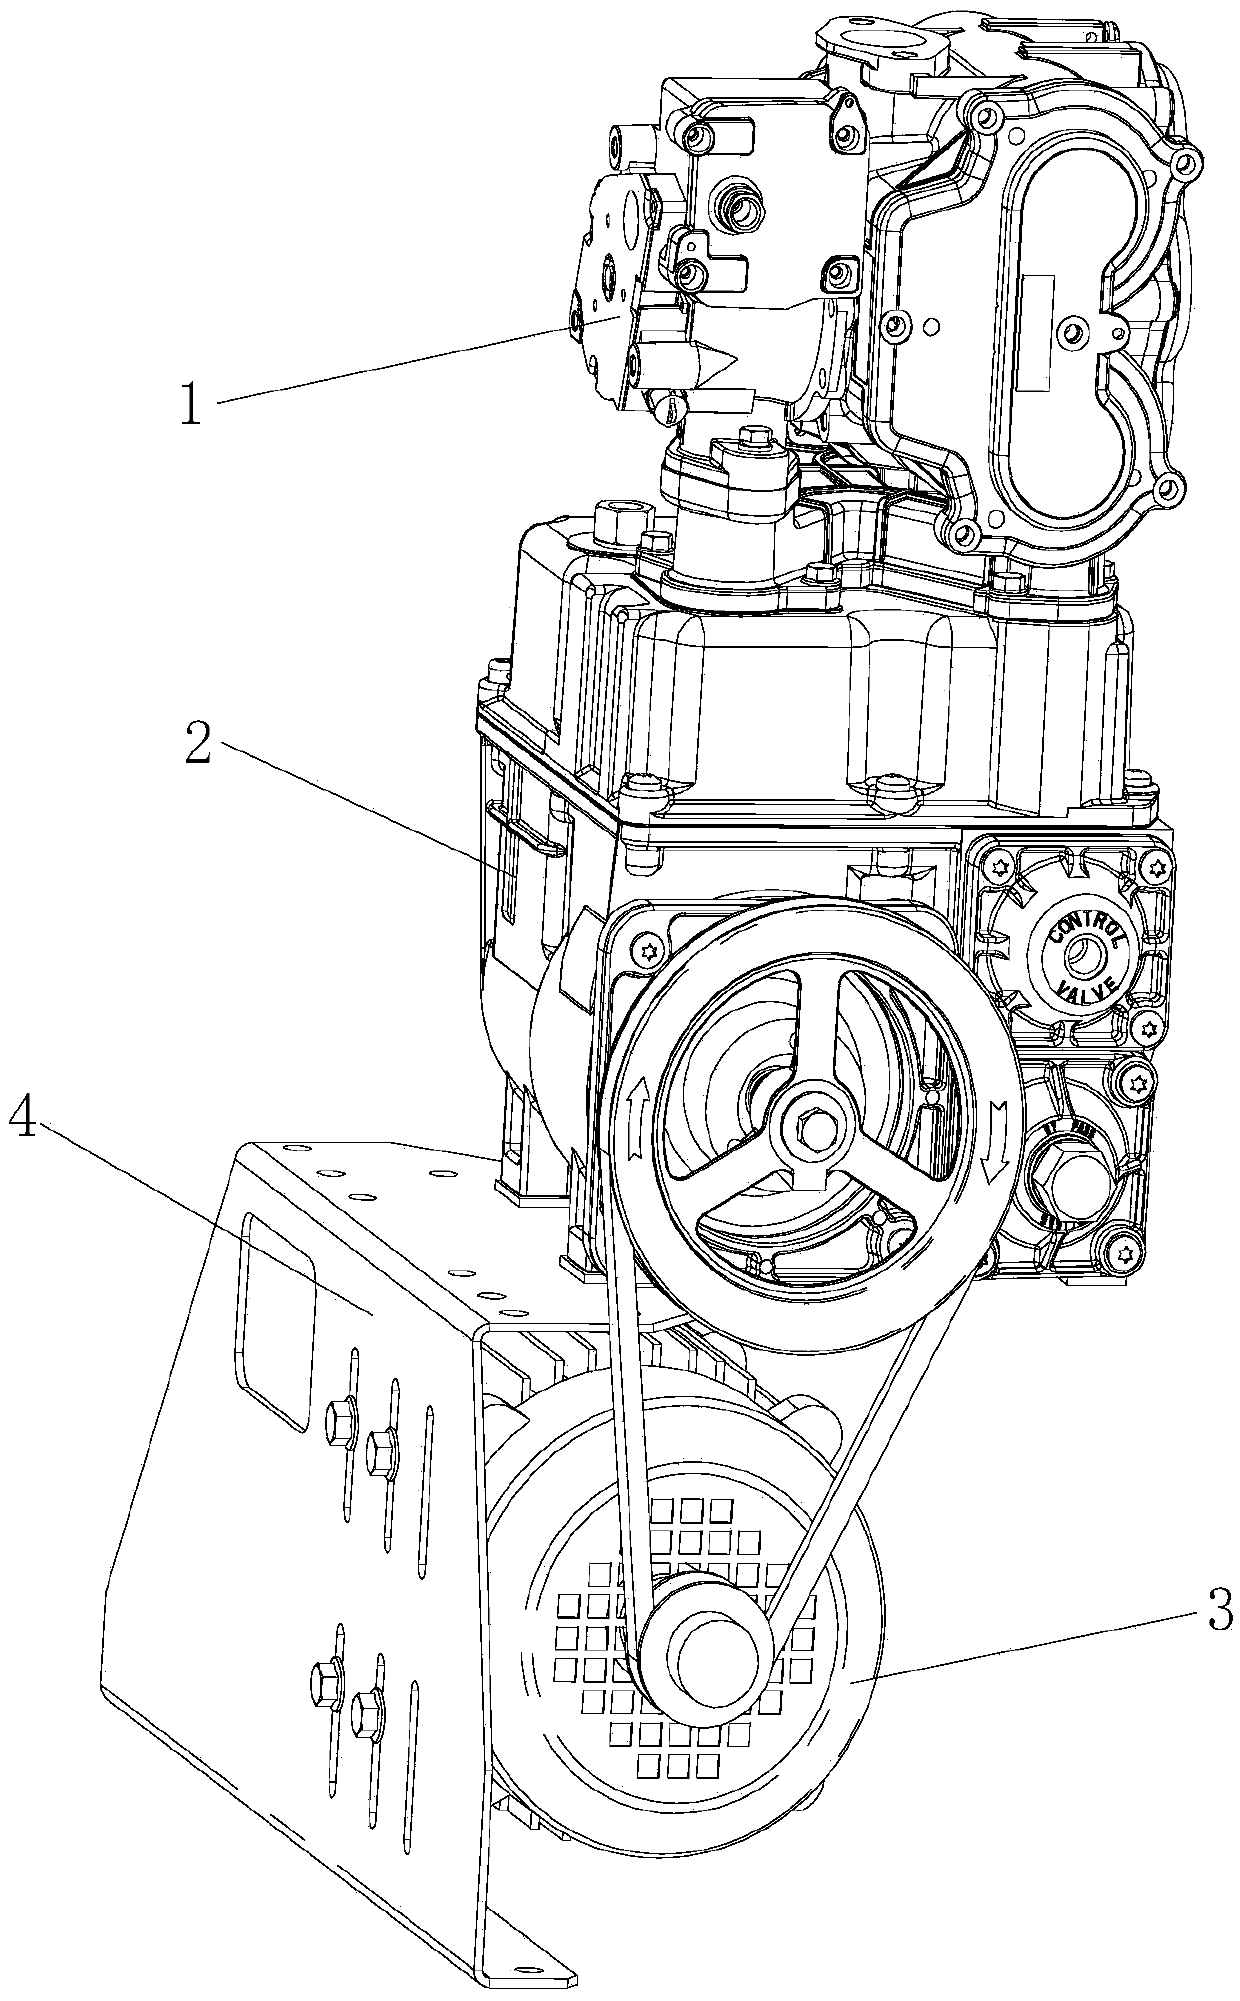 Hydraulic system of oiling machine